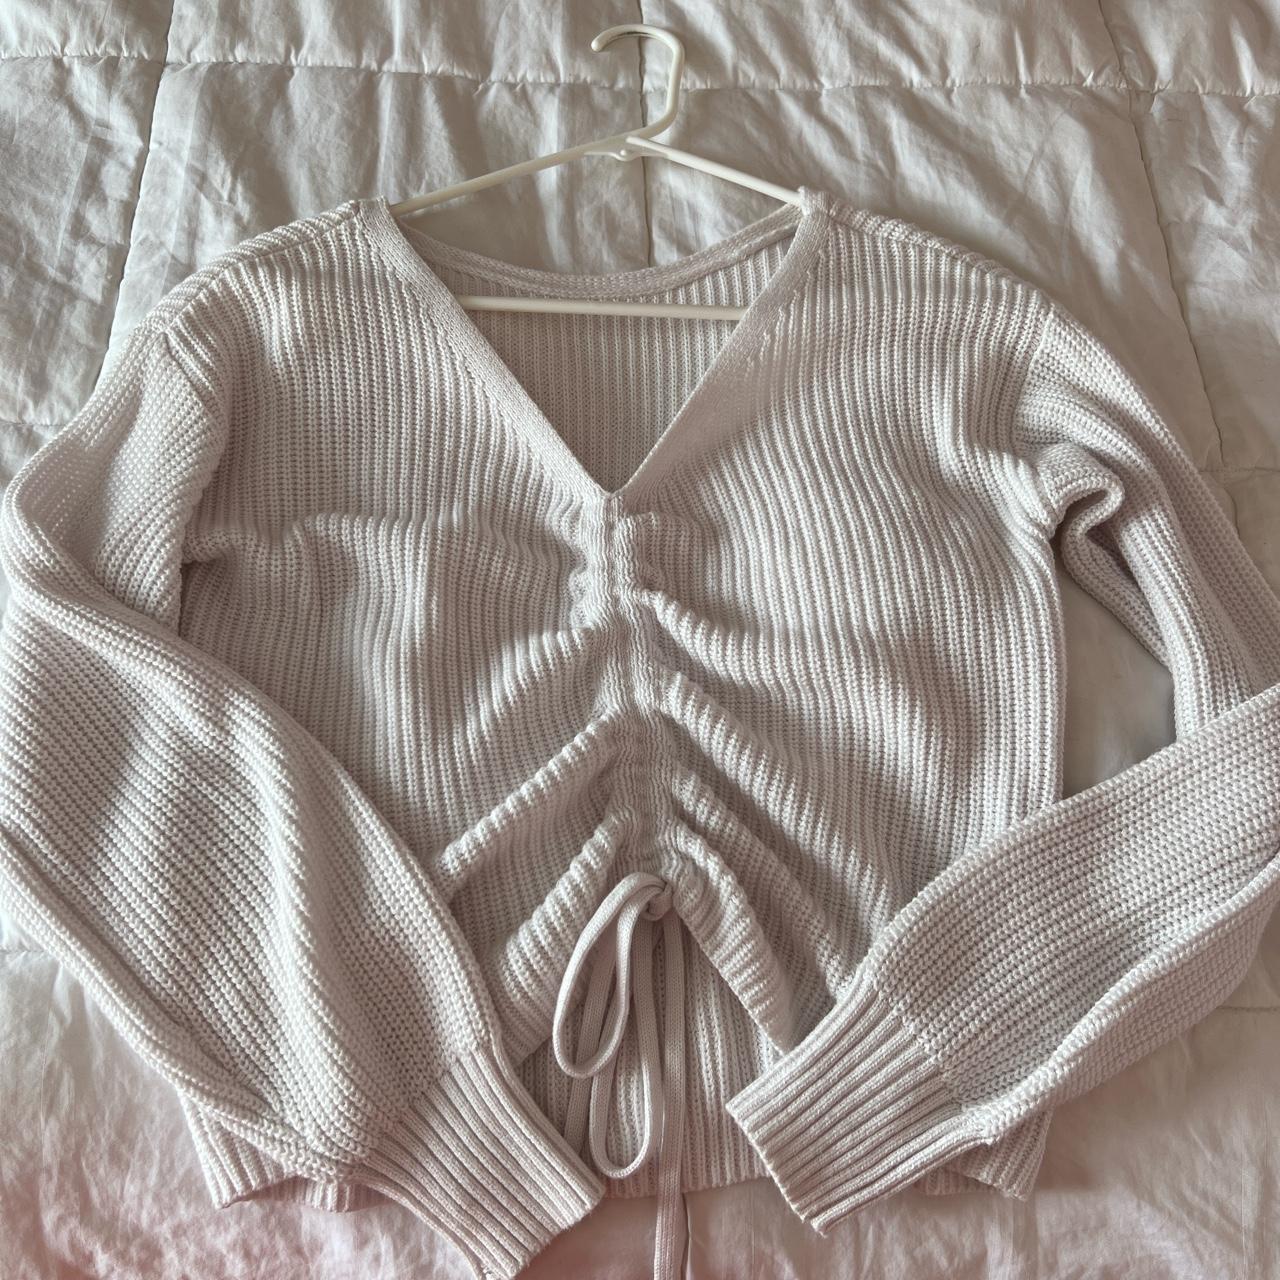 Hollister adjustable cropped white sweater - Depop